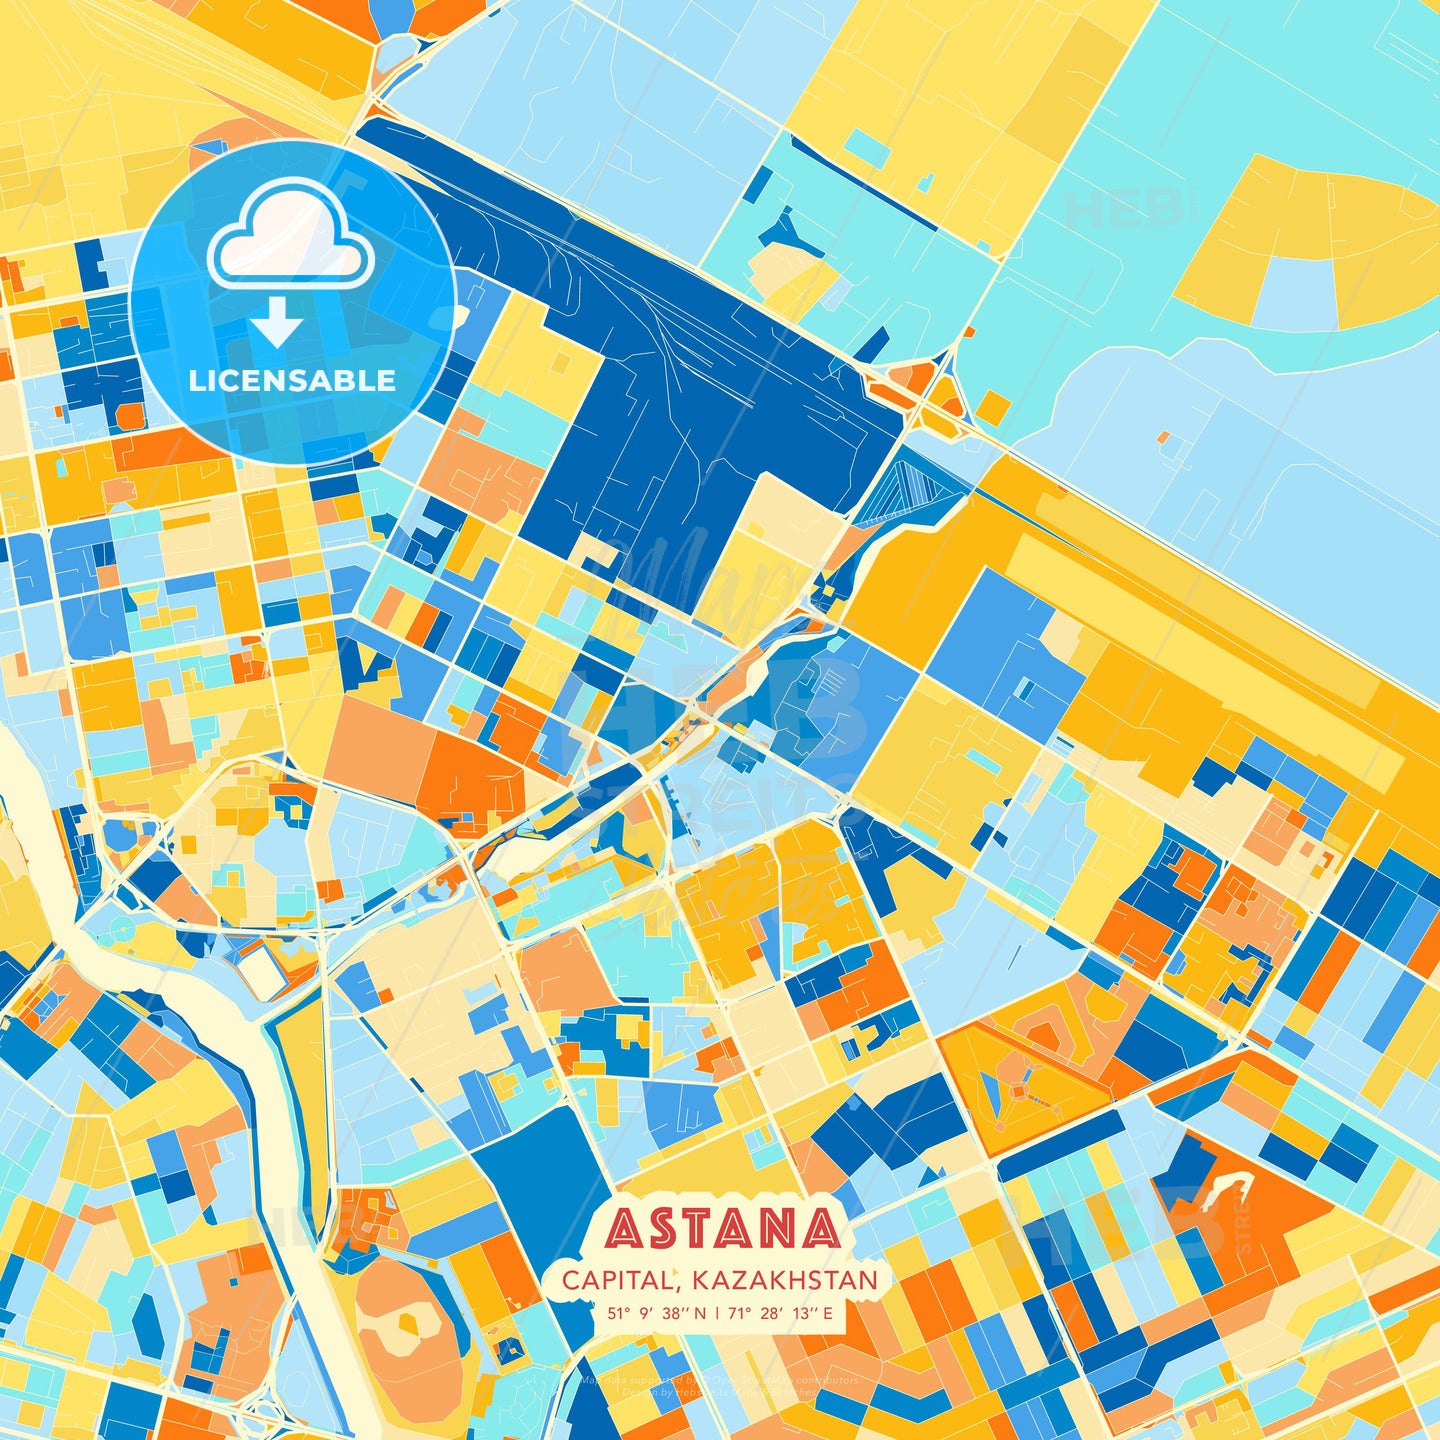 Astana, Capital, Kazakhstan, map - HEBSTREITS Sketches